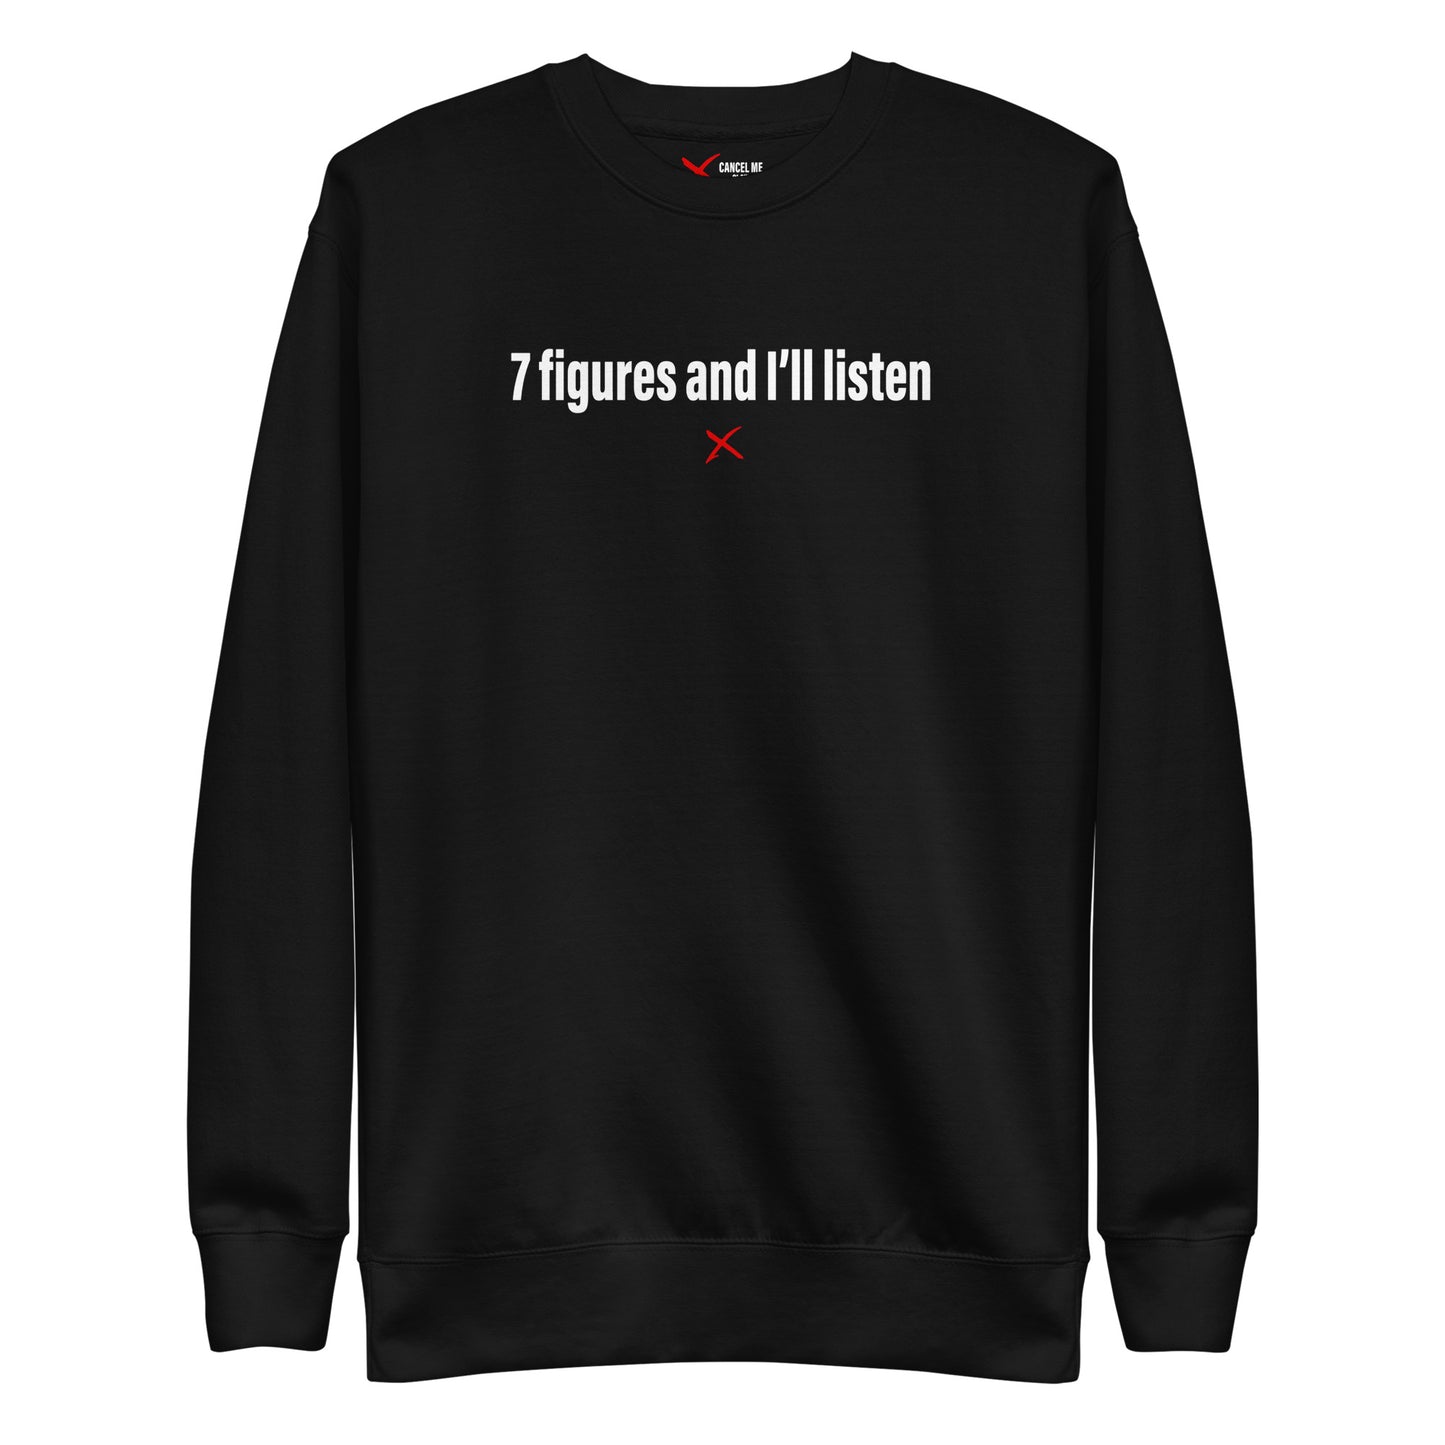 7 figures and I'll listen - Sweatshirt